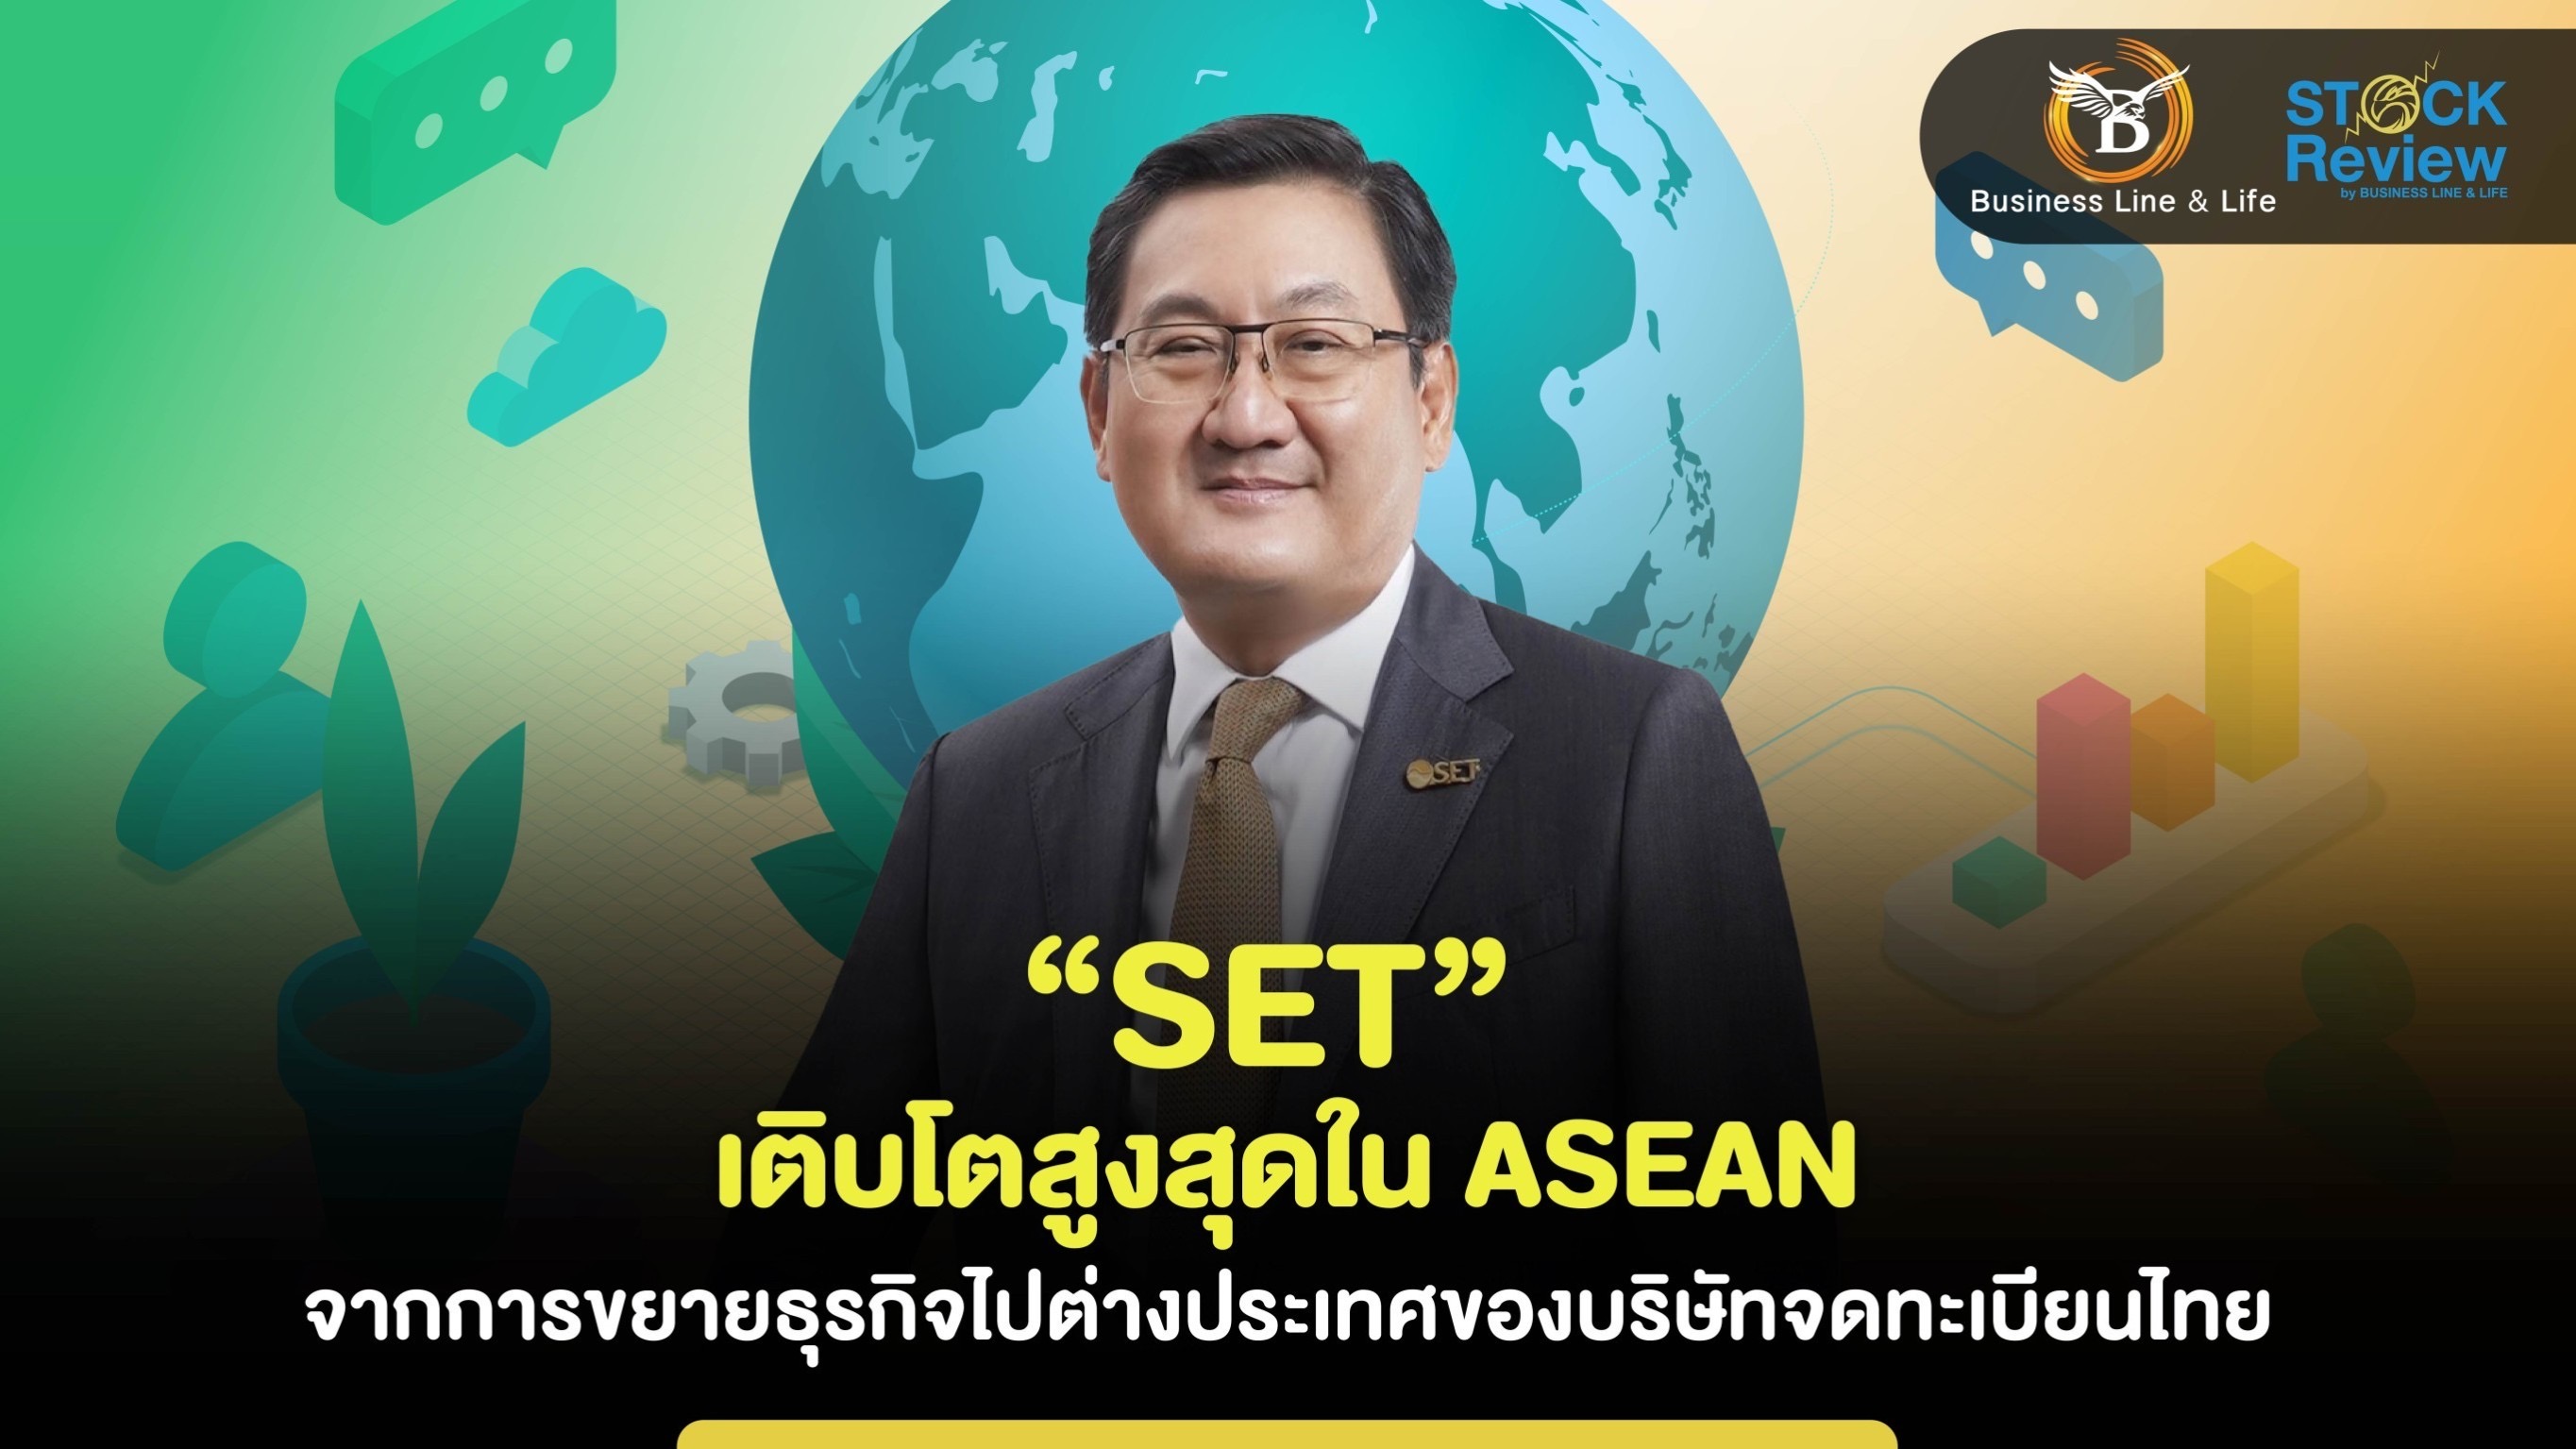 SET เติบโตสูงสุดใน ASEAN จากการขยายธุรกิจไปต่างประเทศ